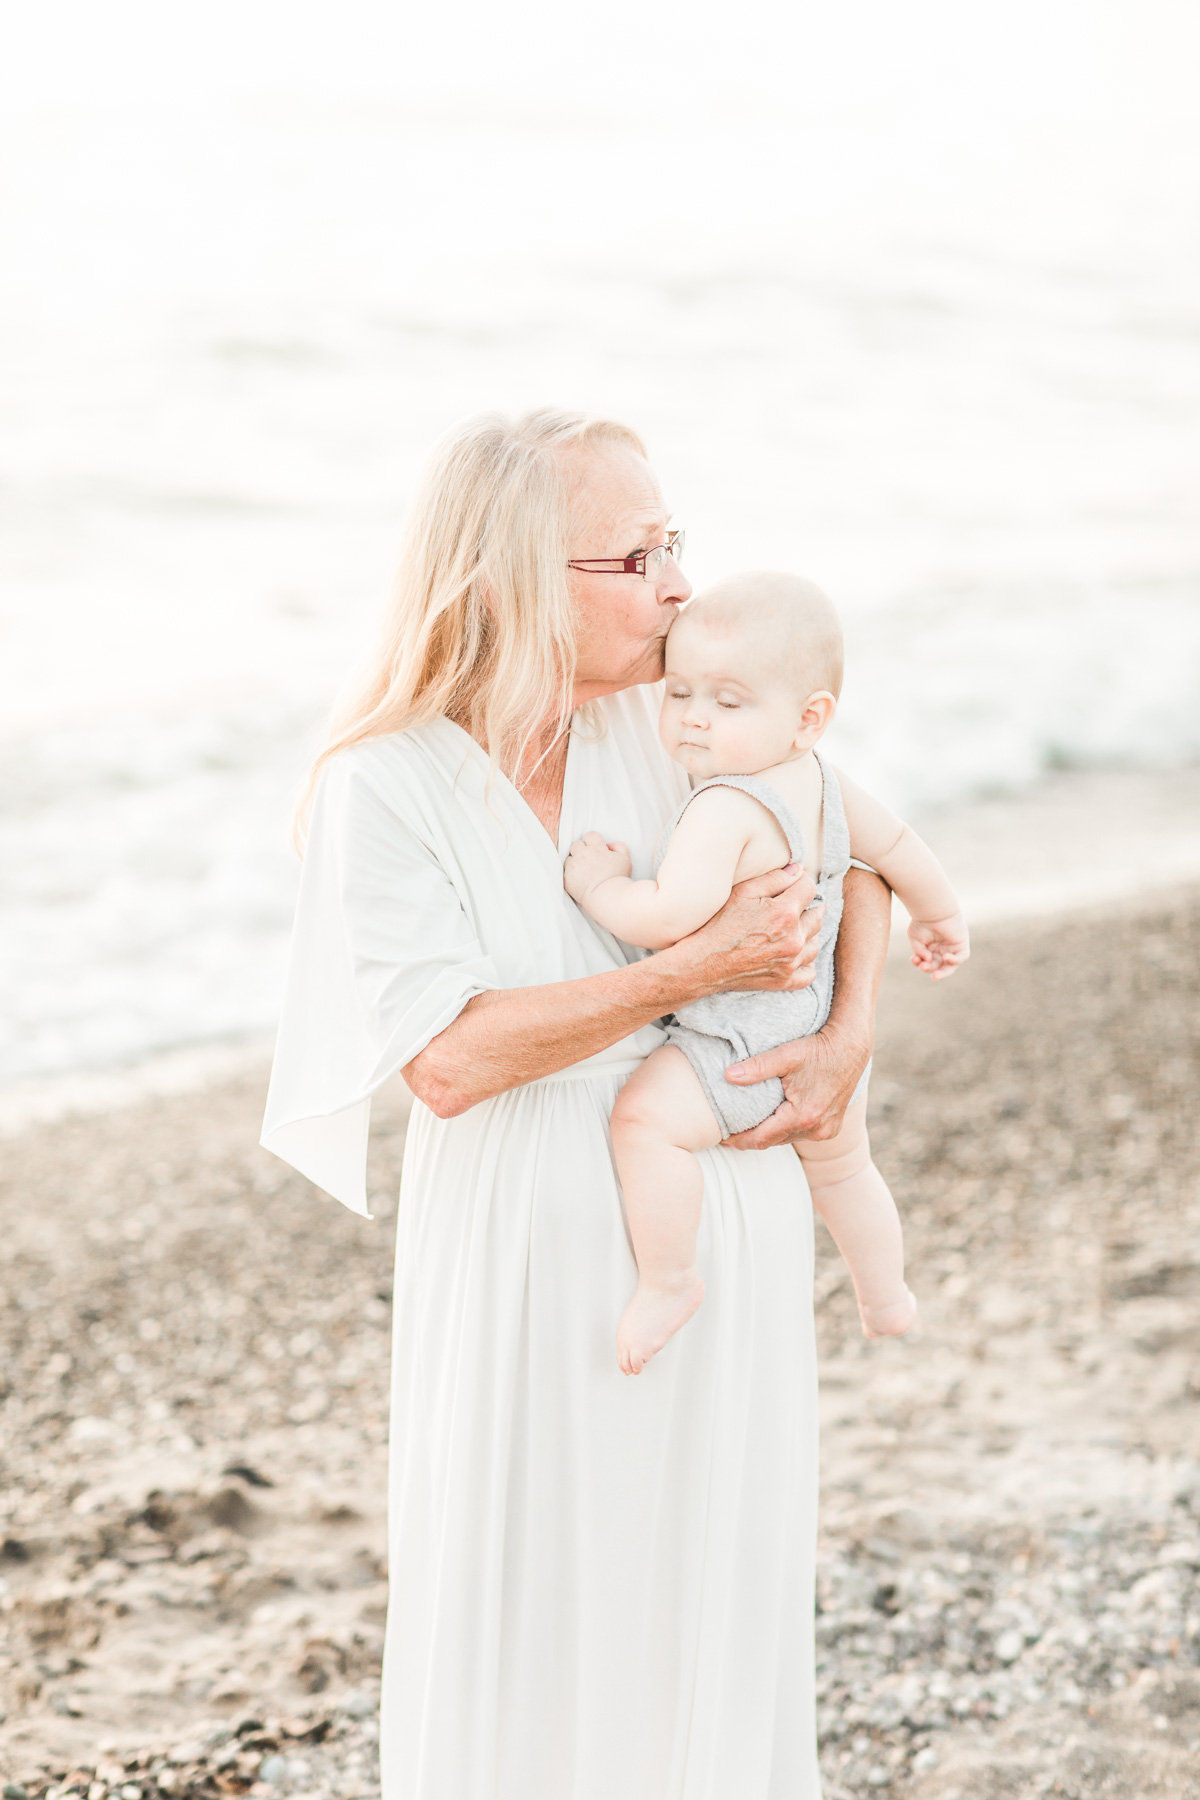 Erin Davison Photography | Mentor Ohio Photographer, Cleveland Photographer, Akron Photographer, family photography, maternity photography, newborn photography, beach photography